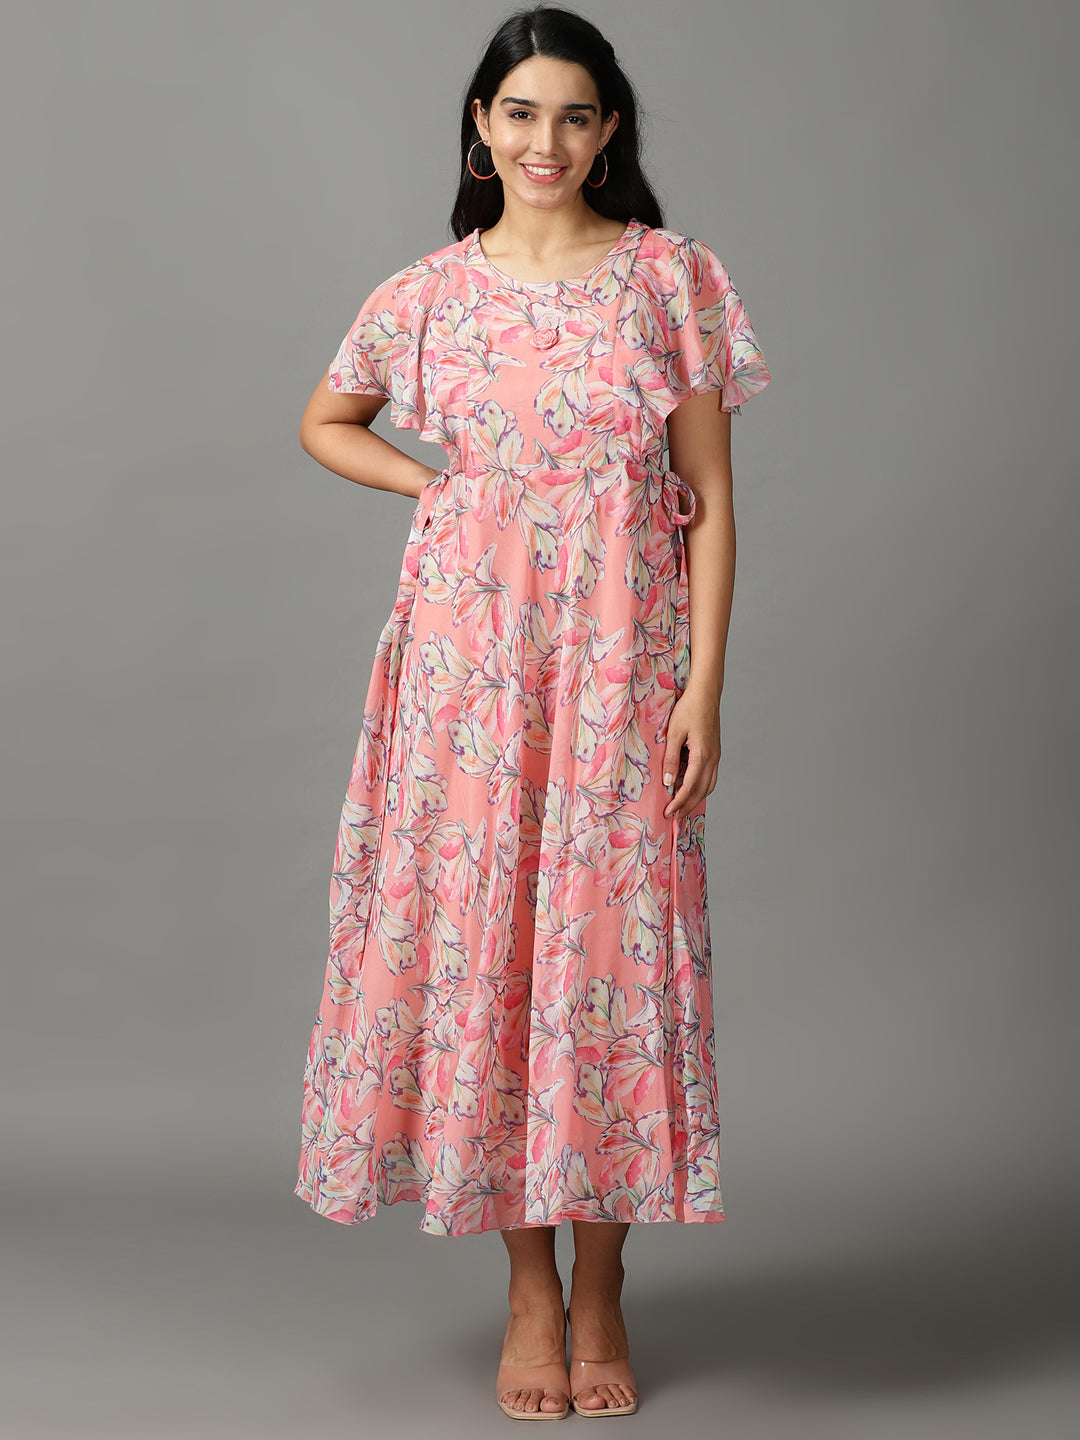 Women's Peach Printed Empire Dress